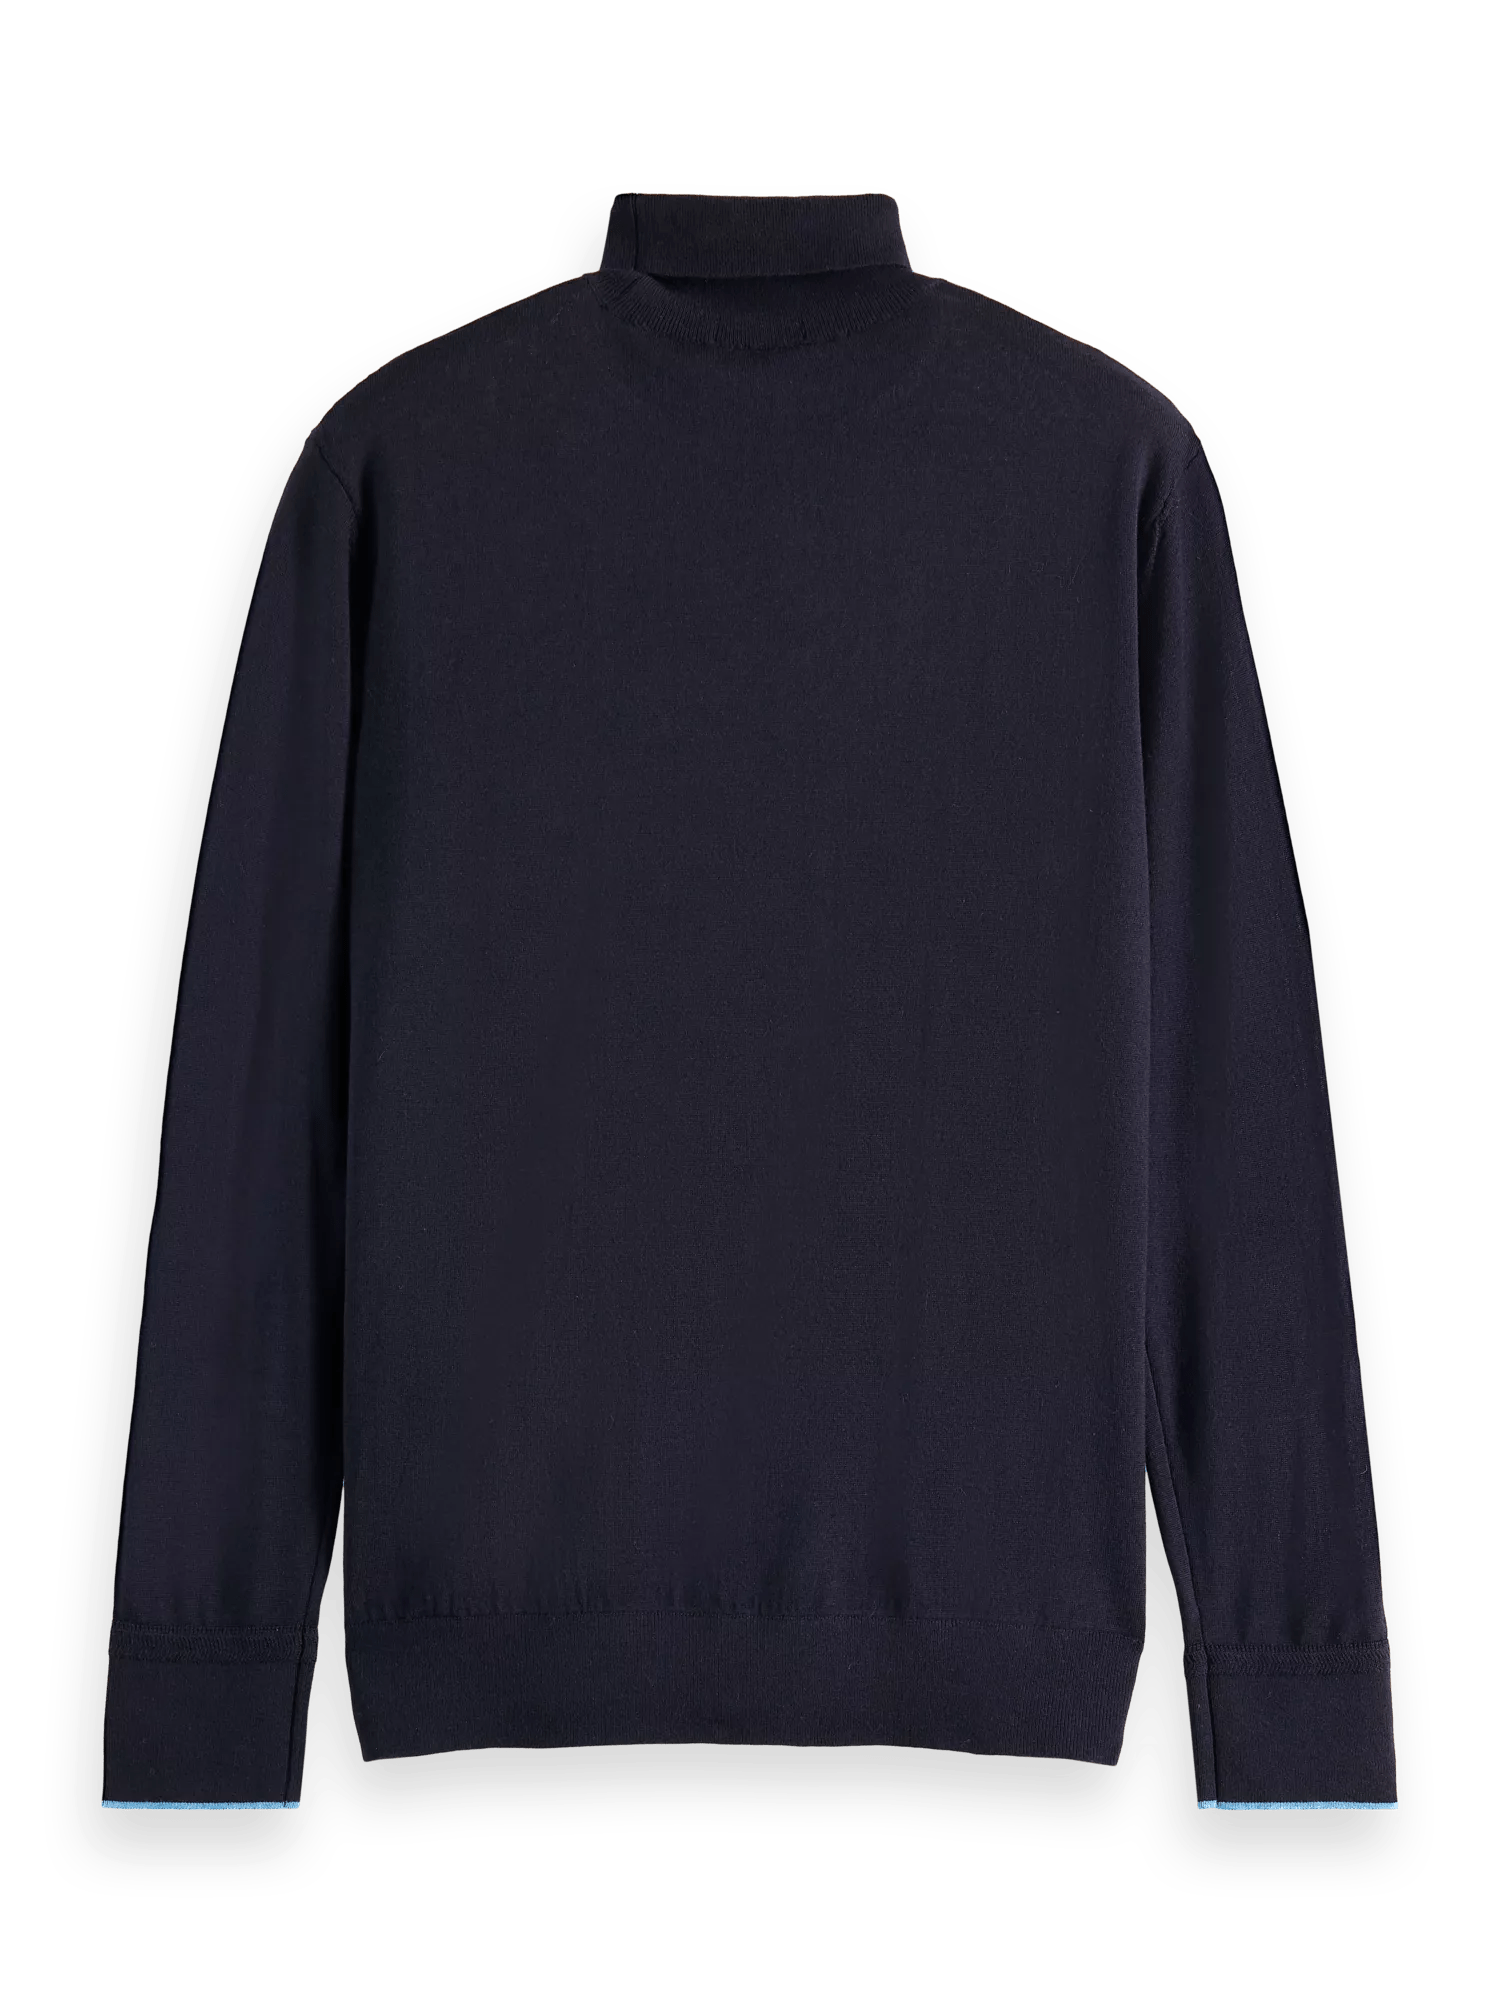 Scotch & Soda Merino wool turtleneck sweater BCK